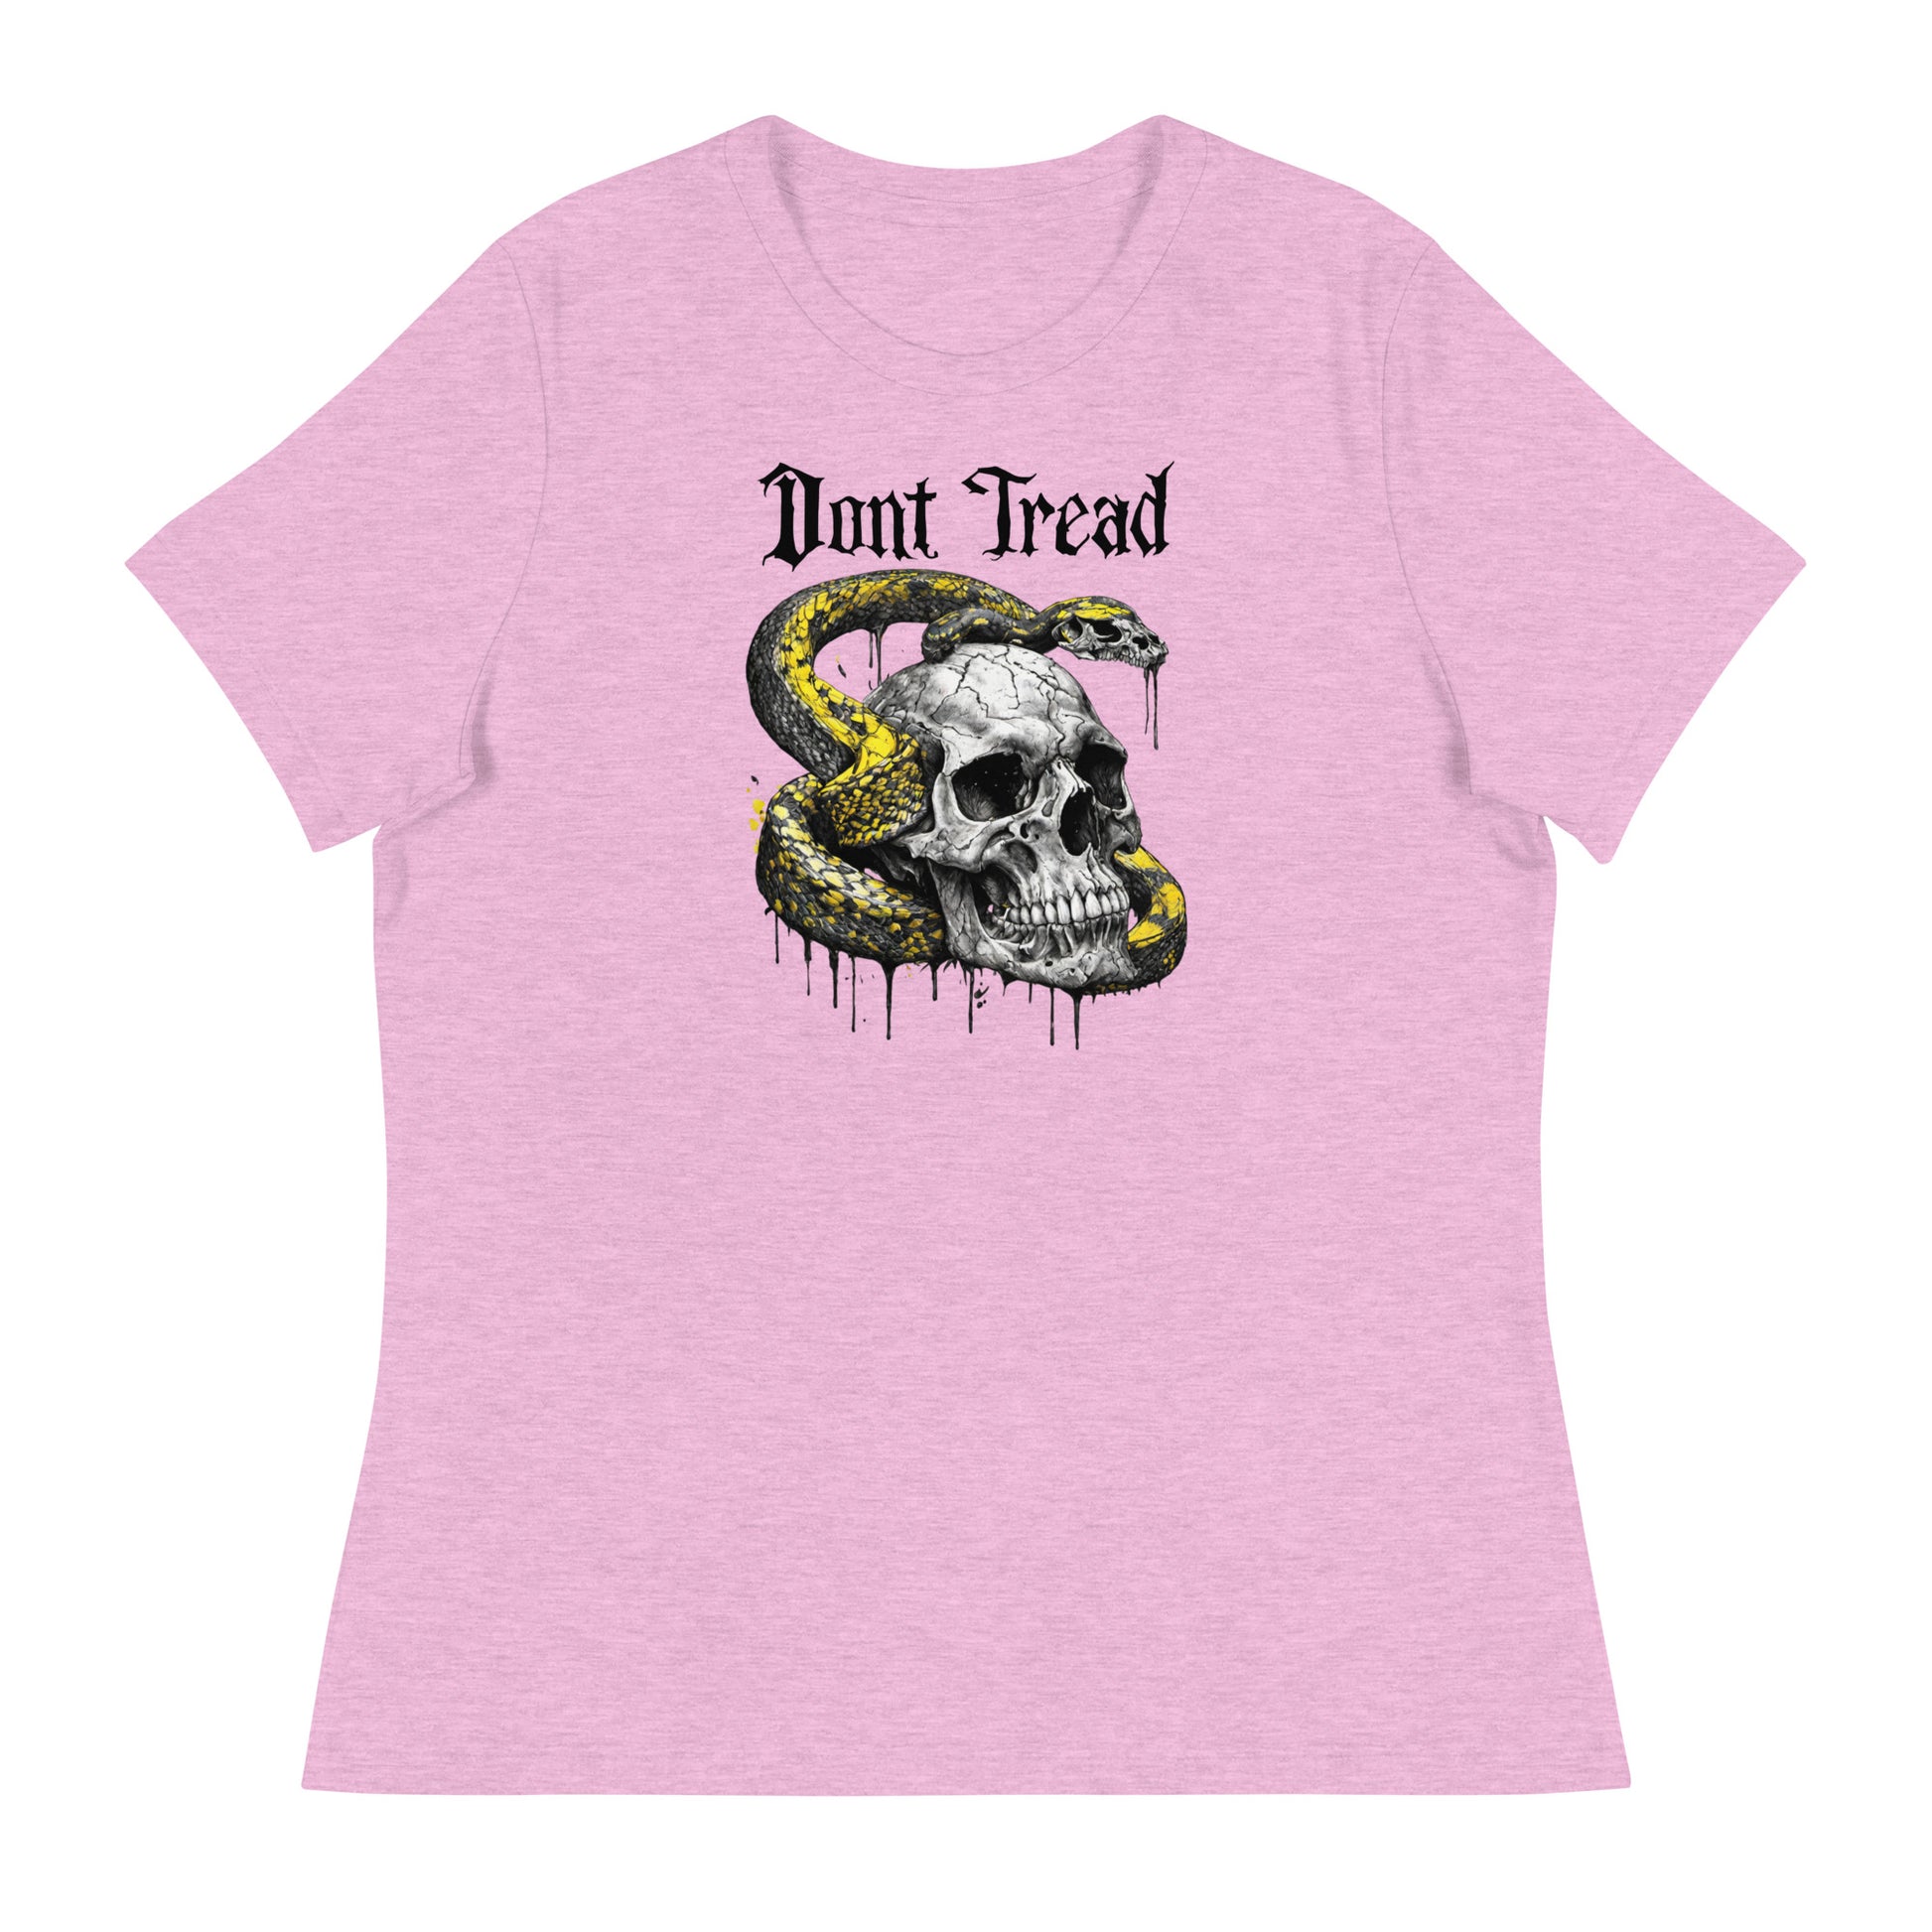 Don't Tread Snake & Skull 2nd Amendment Women's T-Shirt Heather Prism Lilac